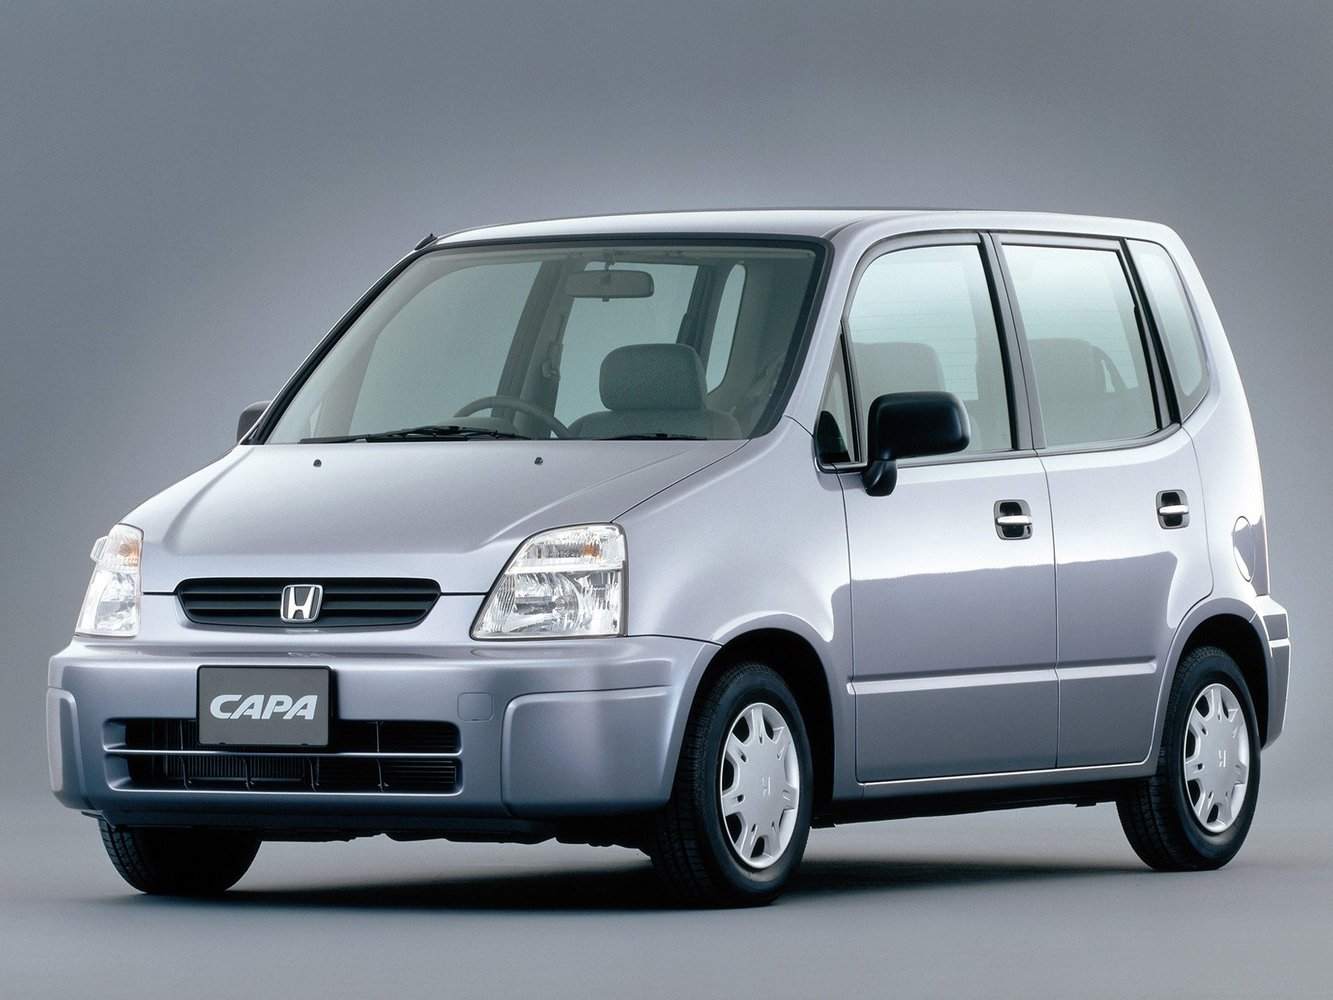 минивэн Honda Capa 1998 - 2002г выпуска модификация 1.5 CVT (98 л.с.)